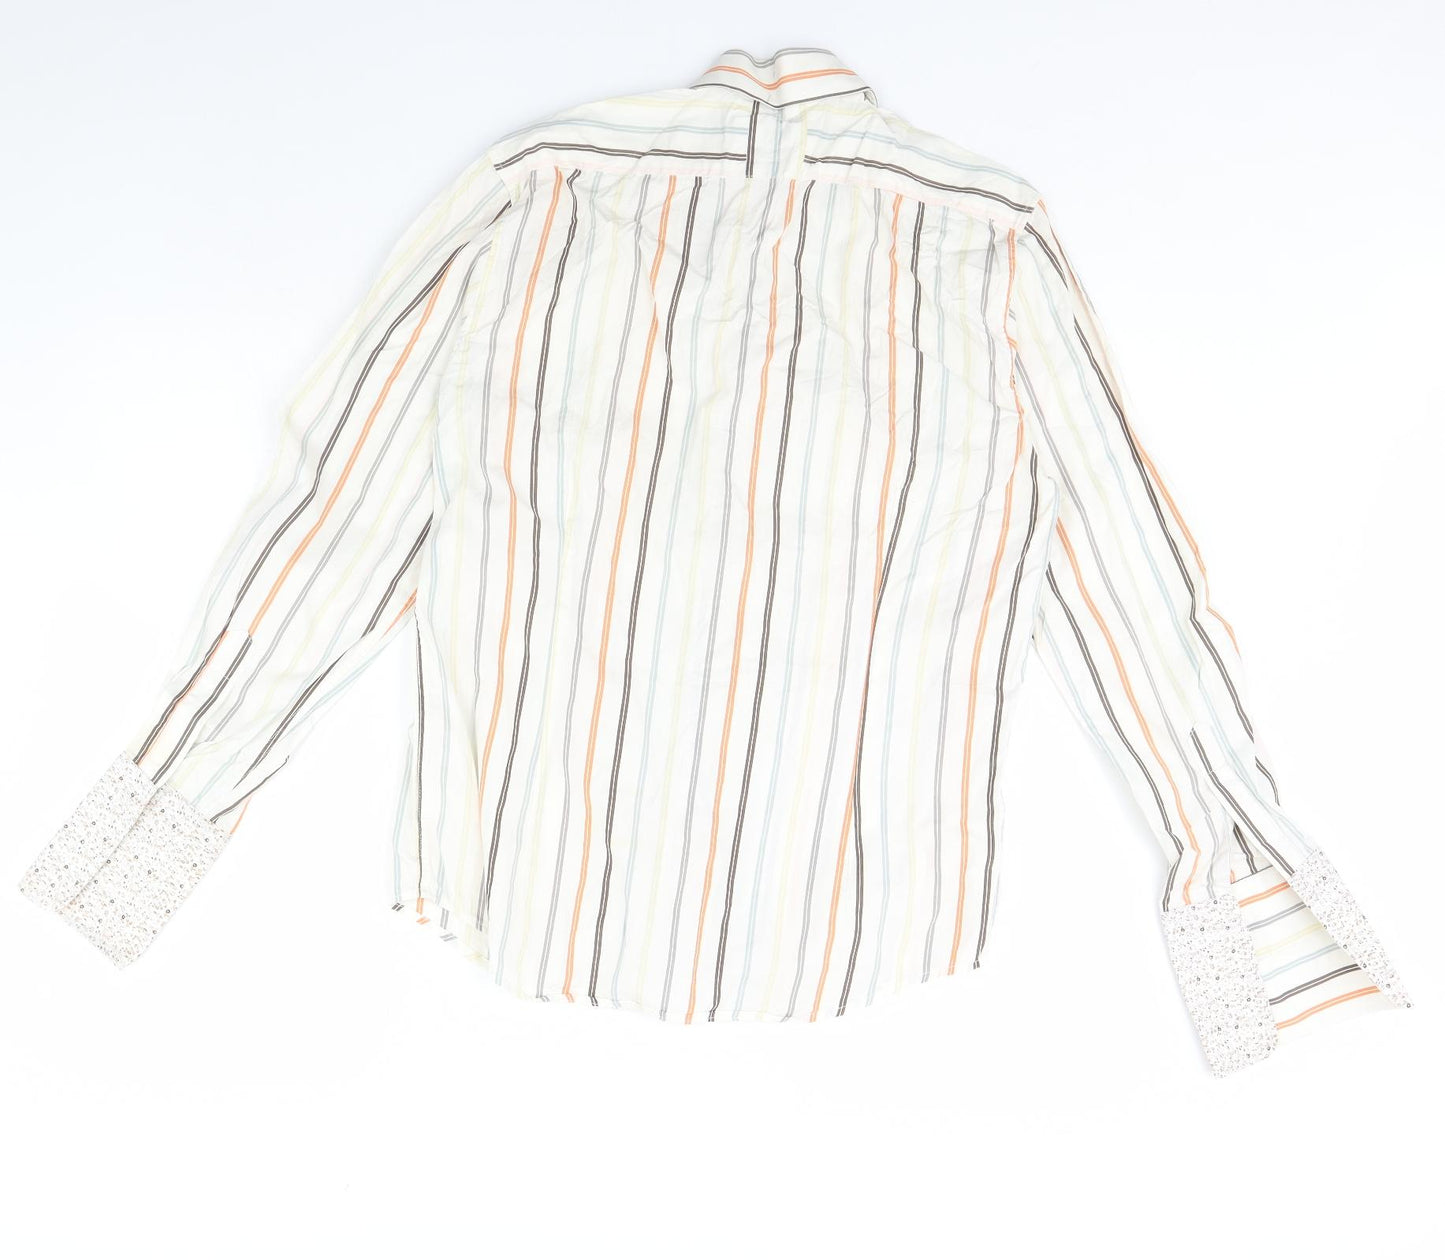 Peter Werth Mens Ivory Striped   Dress Shirt Size M